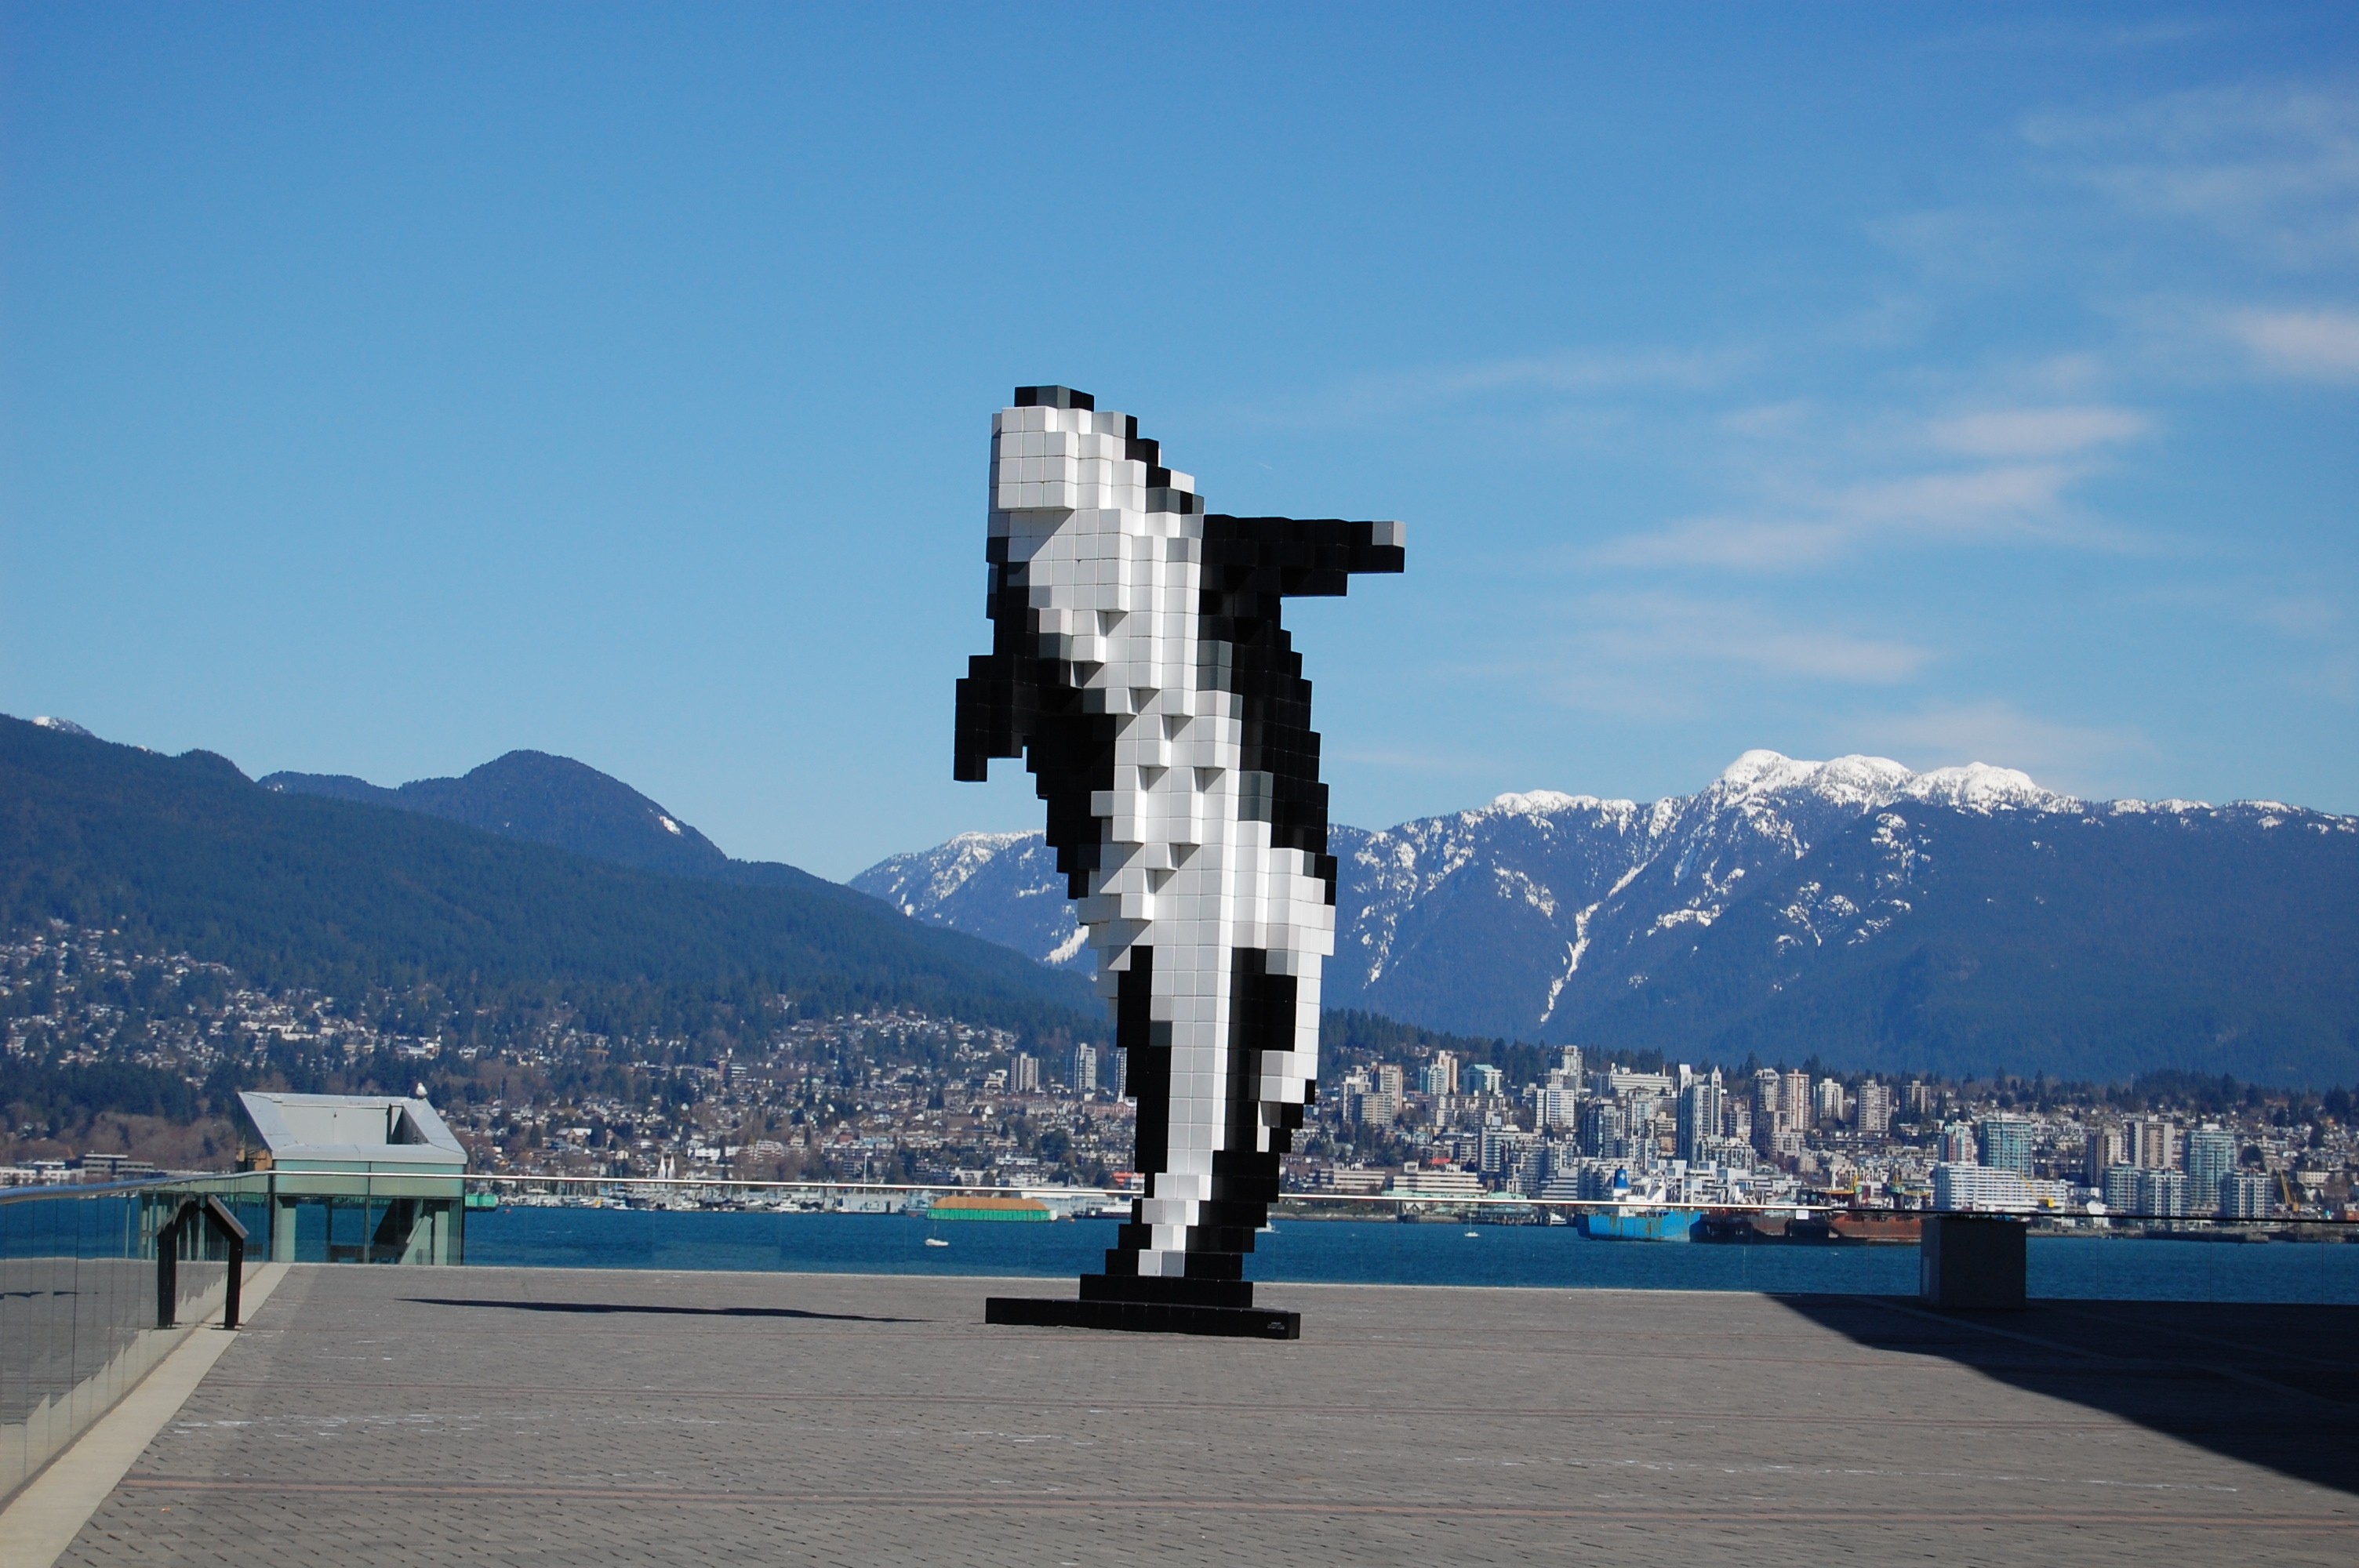 General 3008x2000 pixels pixel art street water mountains sculpture building nature clouds forest cube whale Vancouver 3D Blocks Canada orca